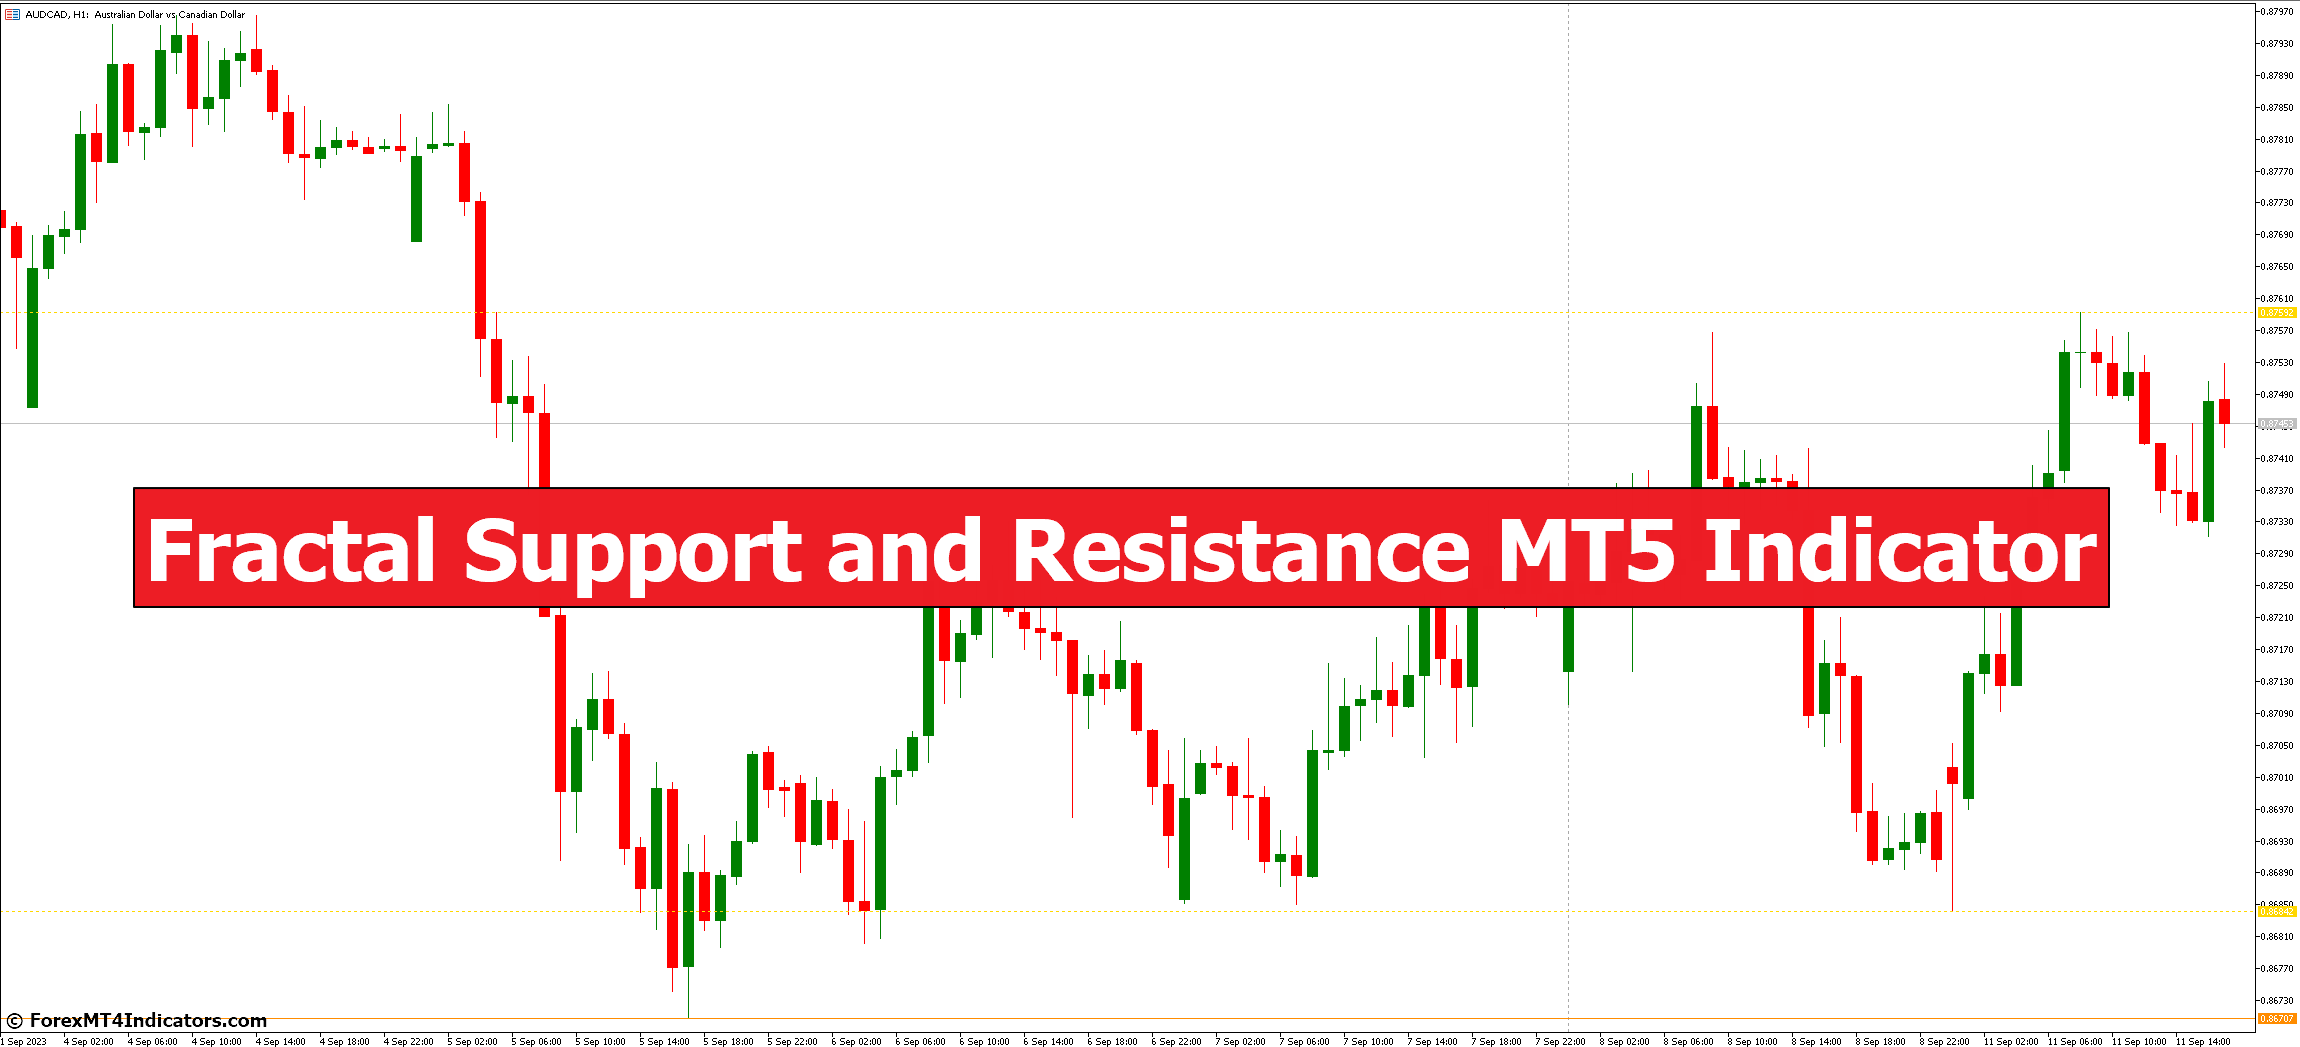 Fractal Support and Resistance MT5 Indicator